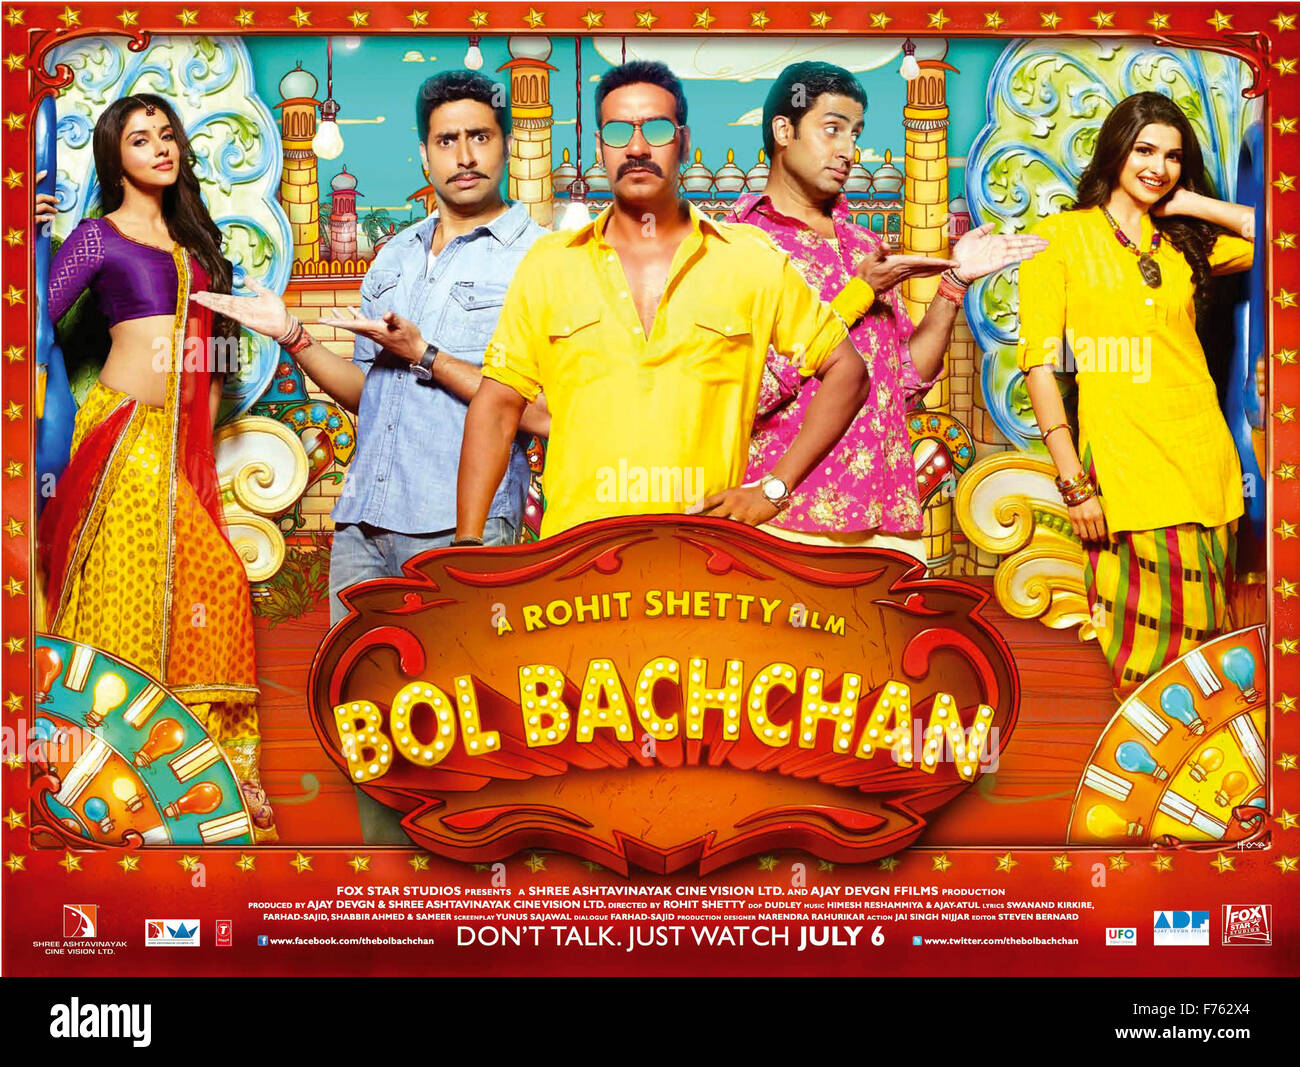 Indisches Bollywood Hindi Filmplakat Von Bol Bachchan A Rohit Shetty Film Indien Stockfotografie Alamy Youtube icon, youtube logo, youtube logo, text, logo, sign png. alamy